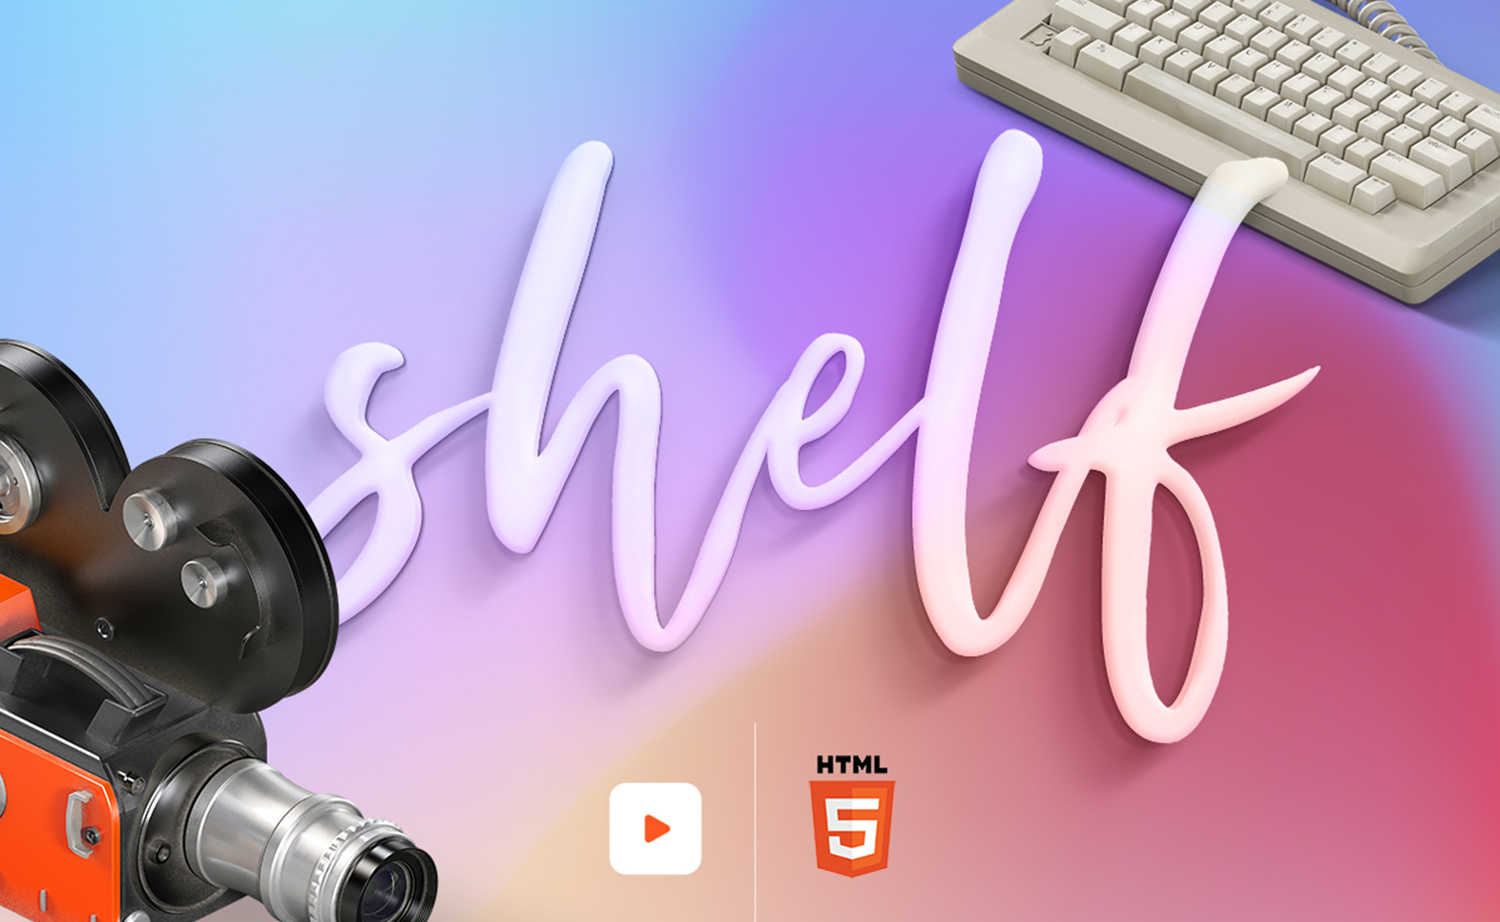 Shelf Logo with a Keyboard and HTML5 Logo